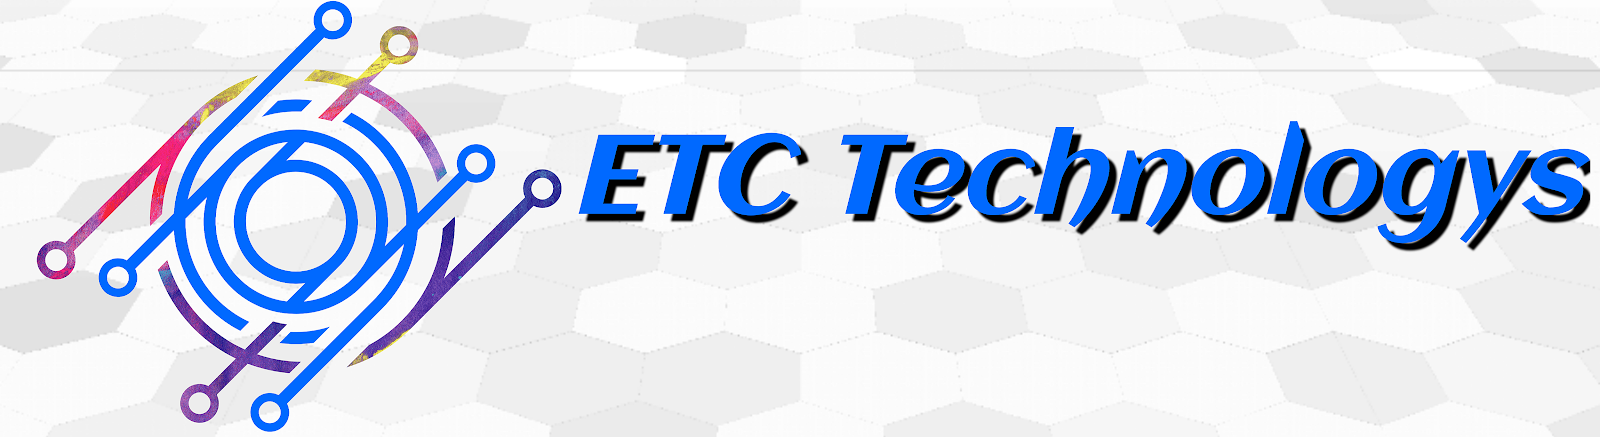 ETC Technology